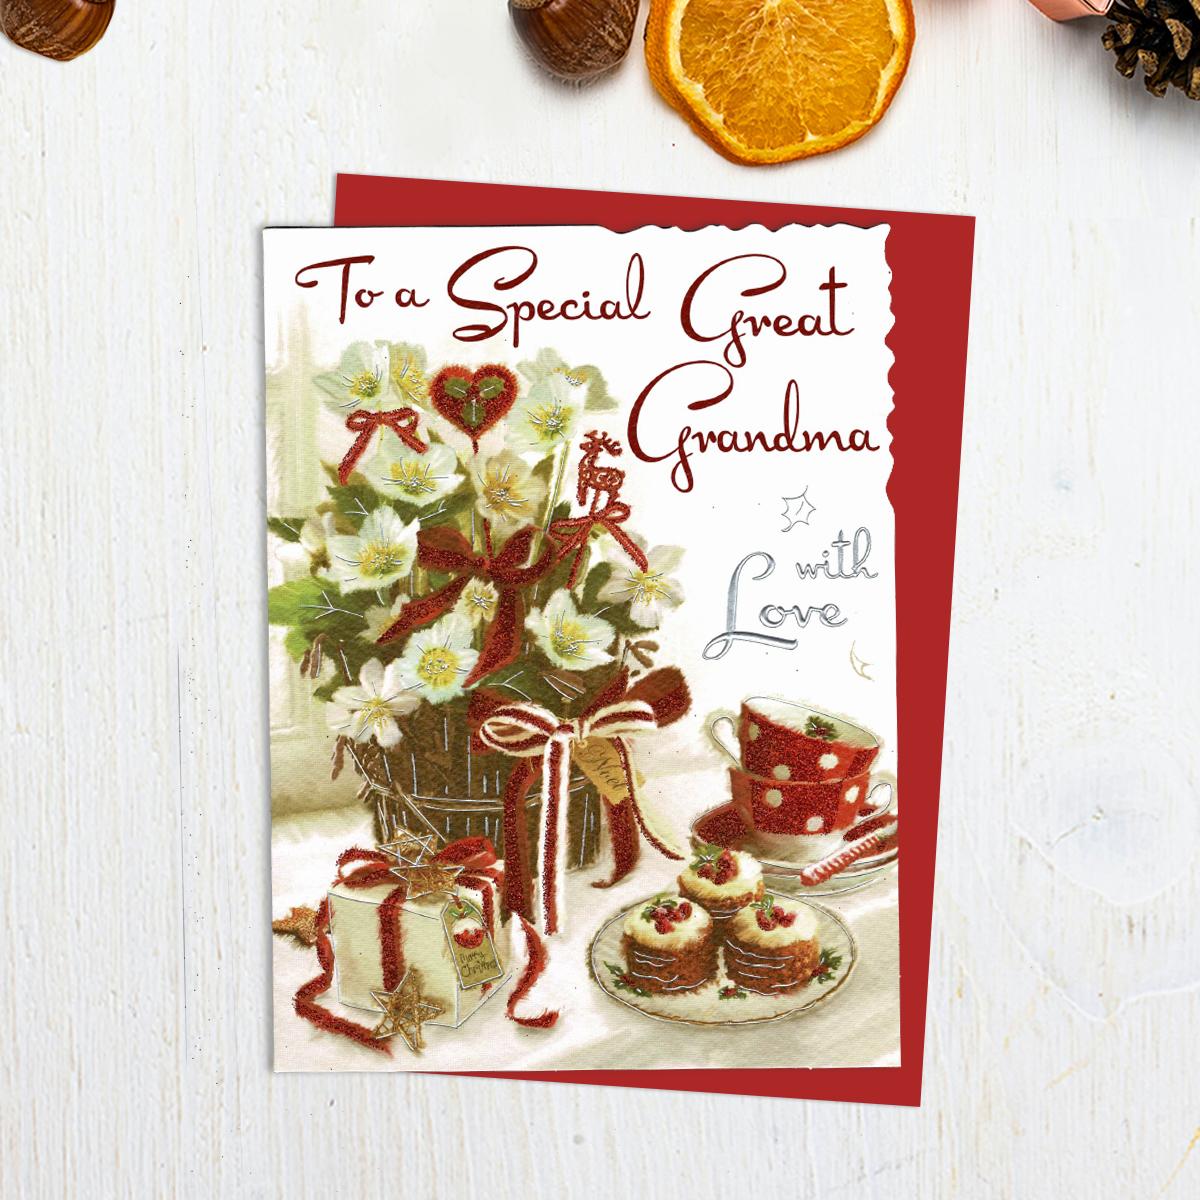 Great Grandma Christmas Card Alongside Its Red Envelope